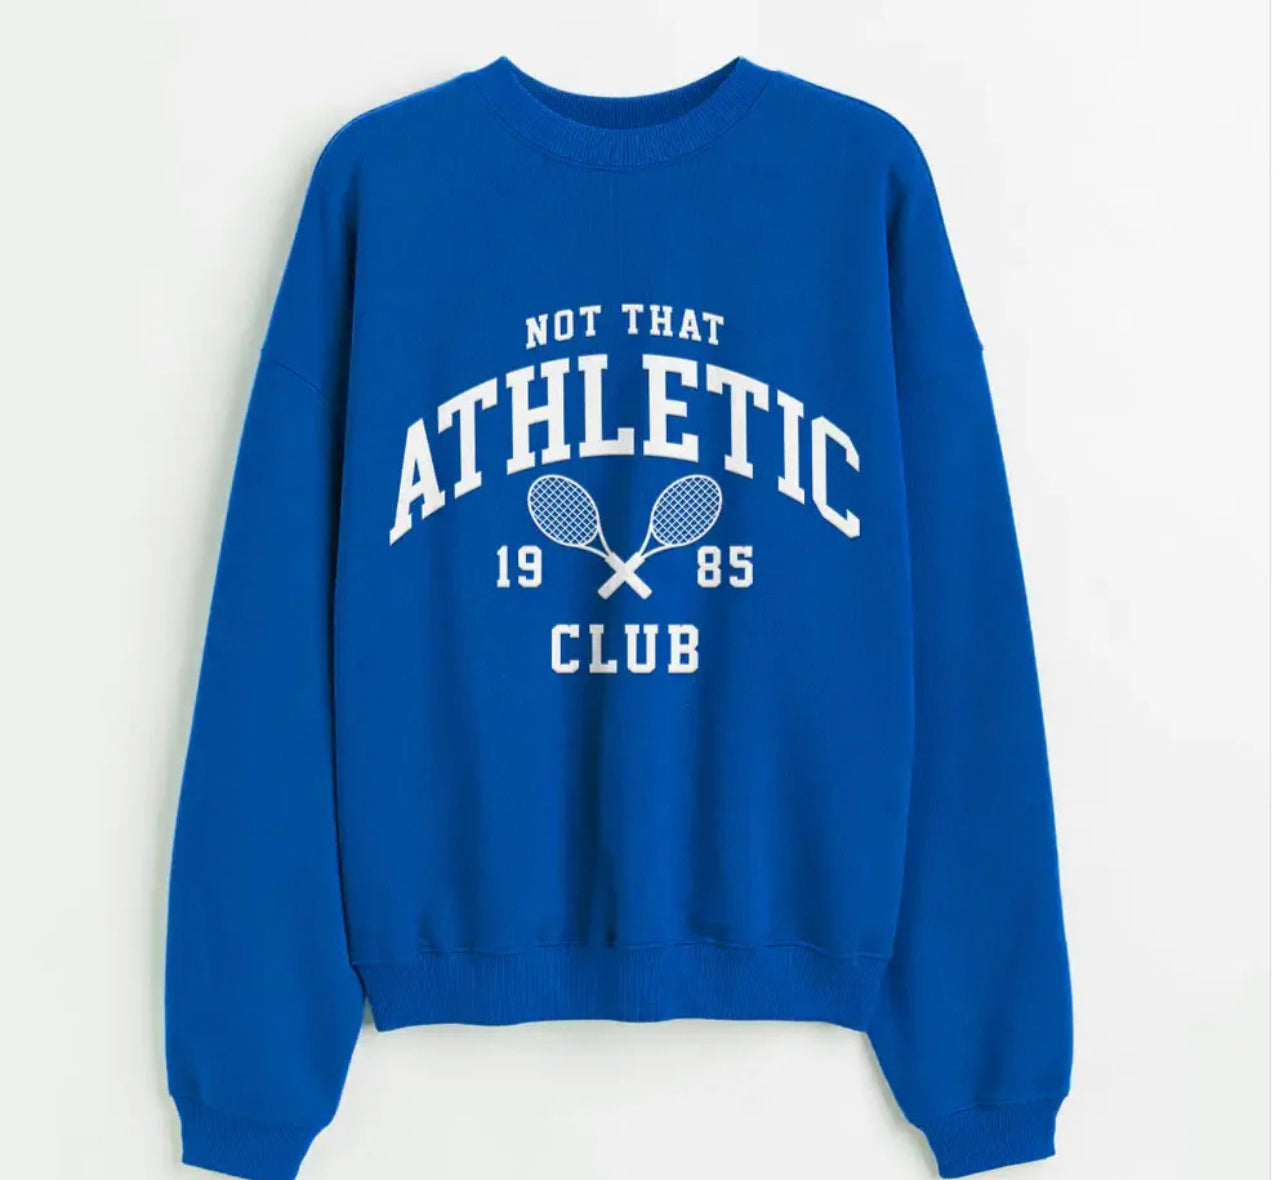 Not That Athletic Club Sweatshirt